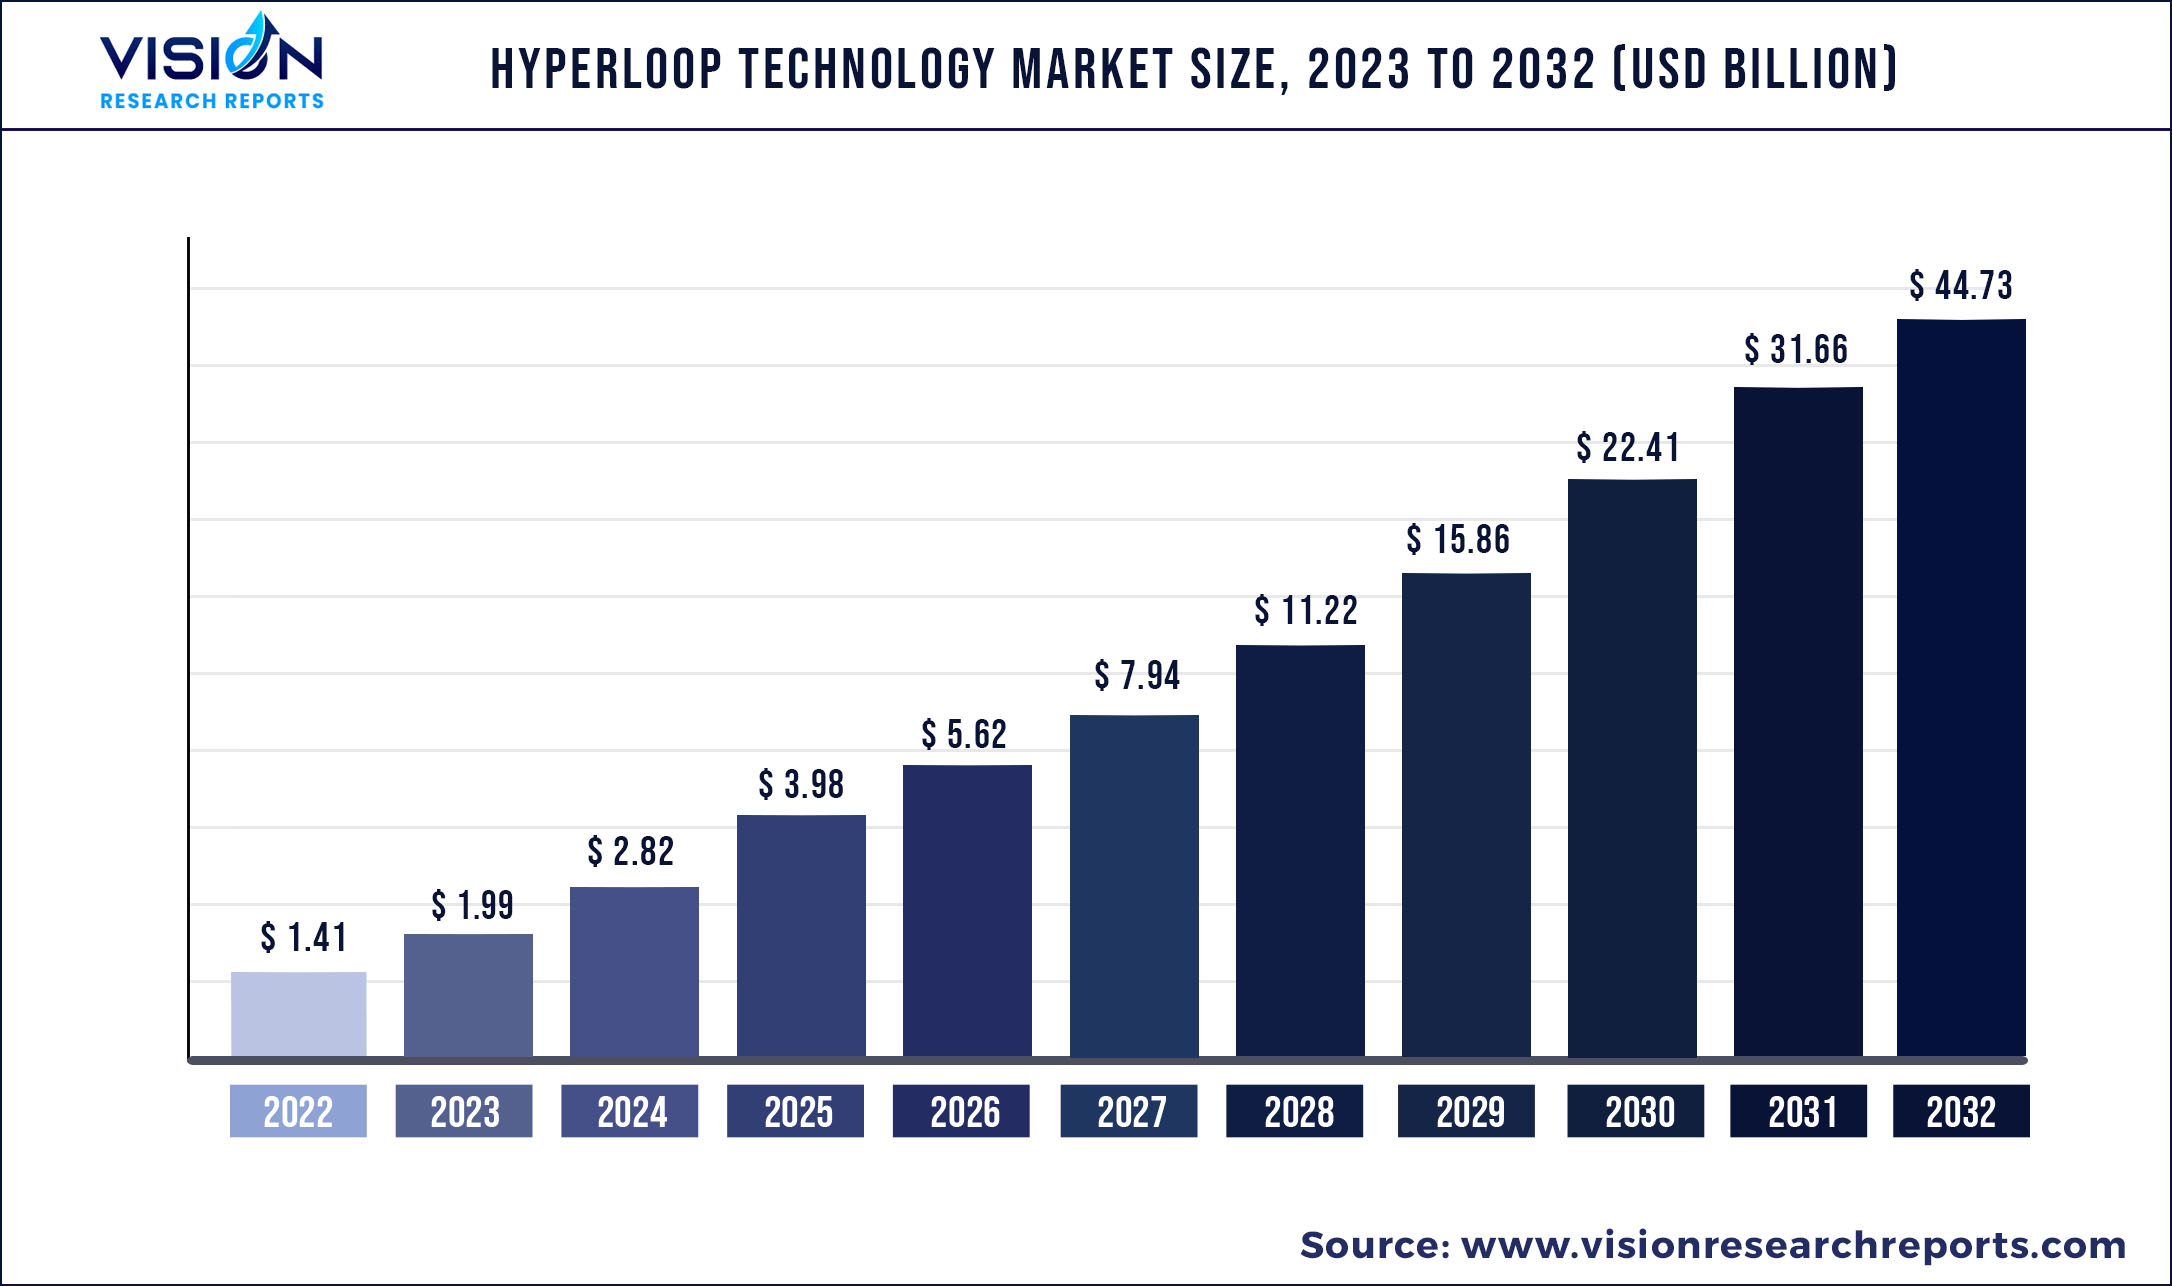 Hyperloop Technology Market Size 2023 to 2032